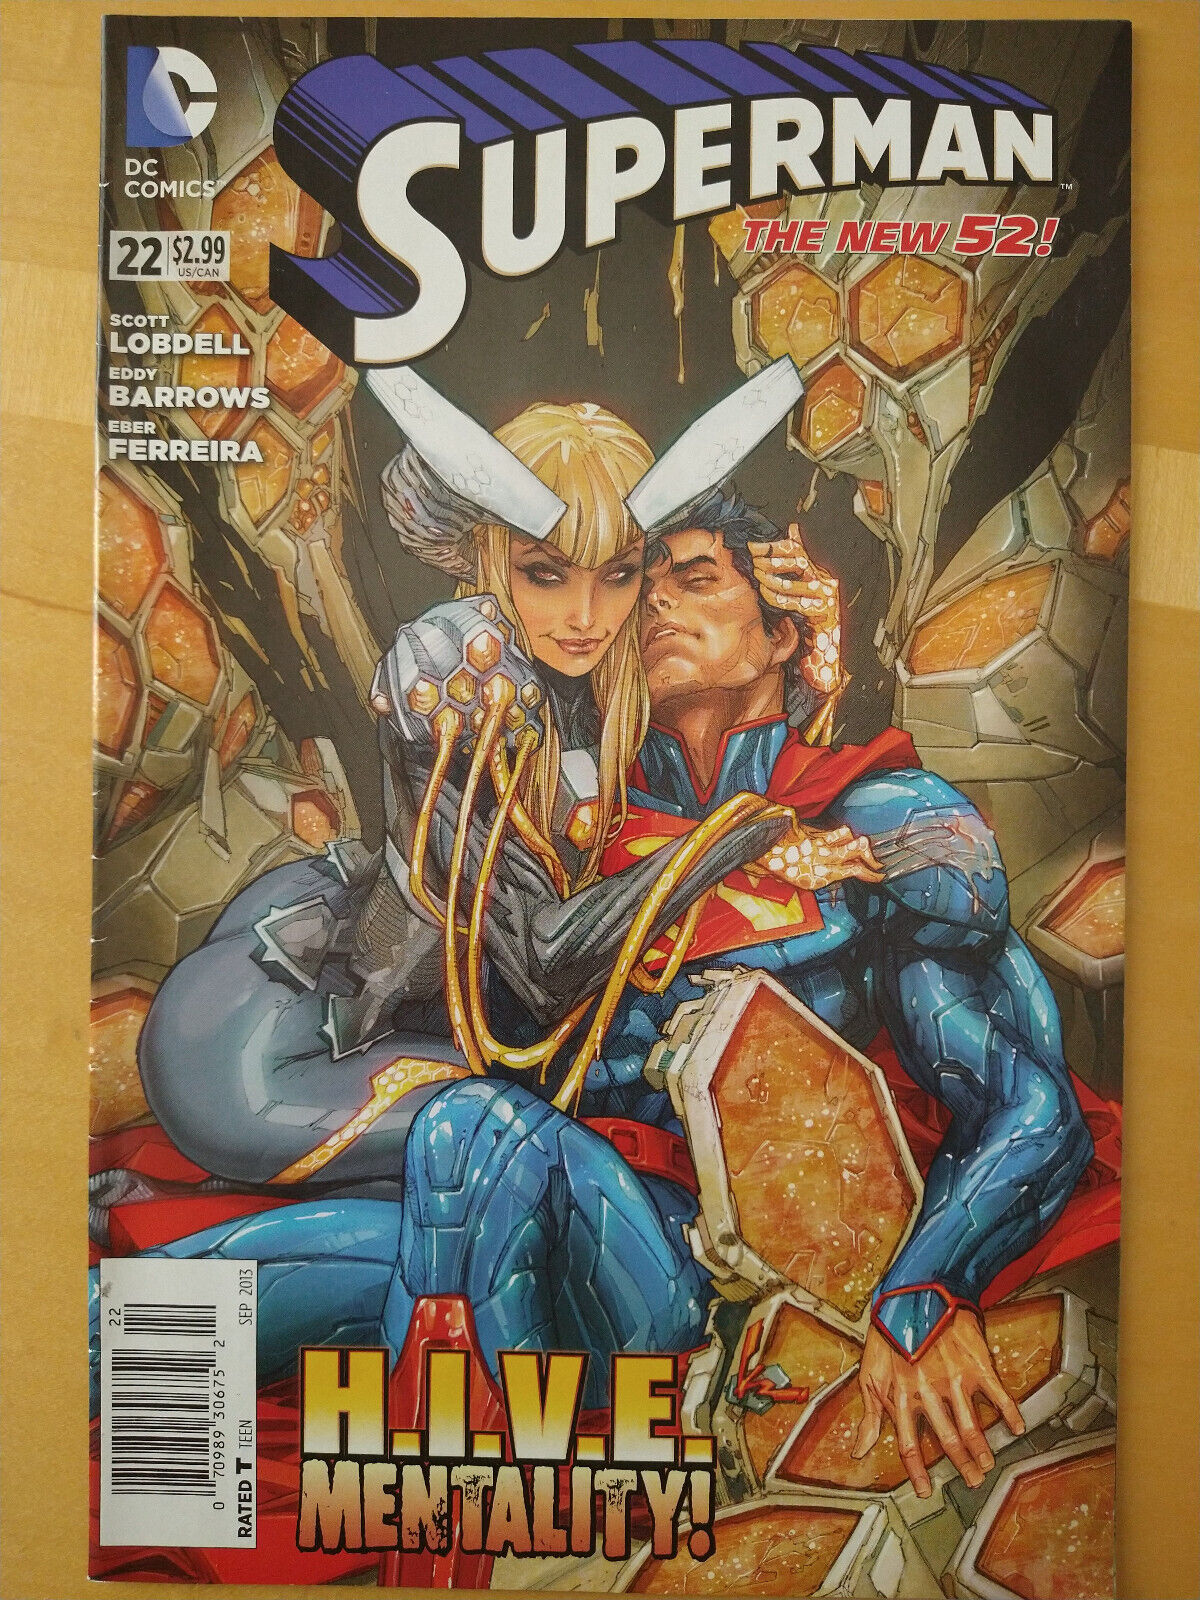 SUPERMAN DC Comics #22 Sept 2013 The New 52 FN/VF